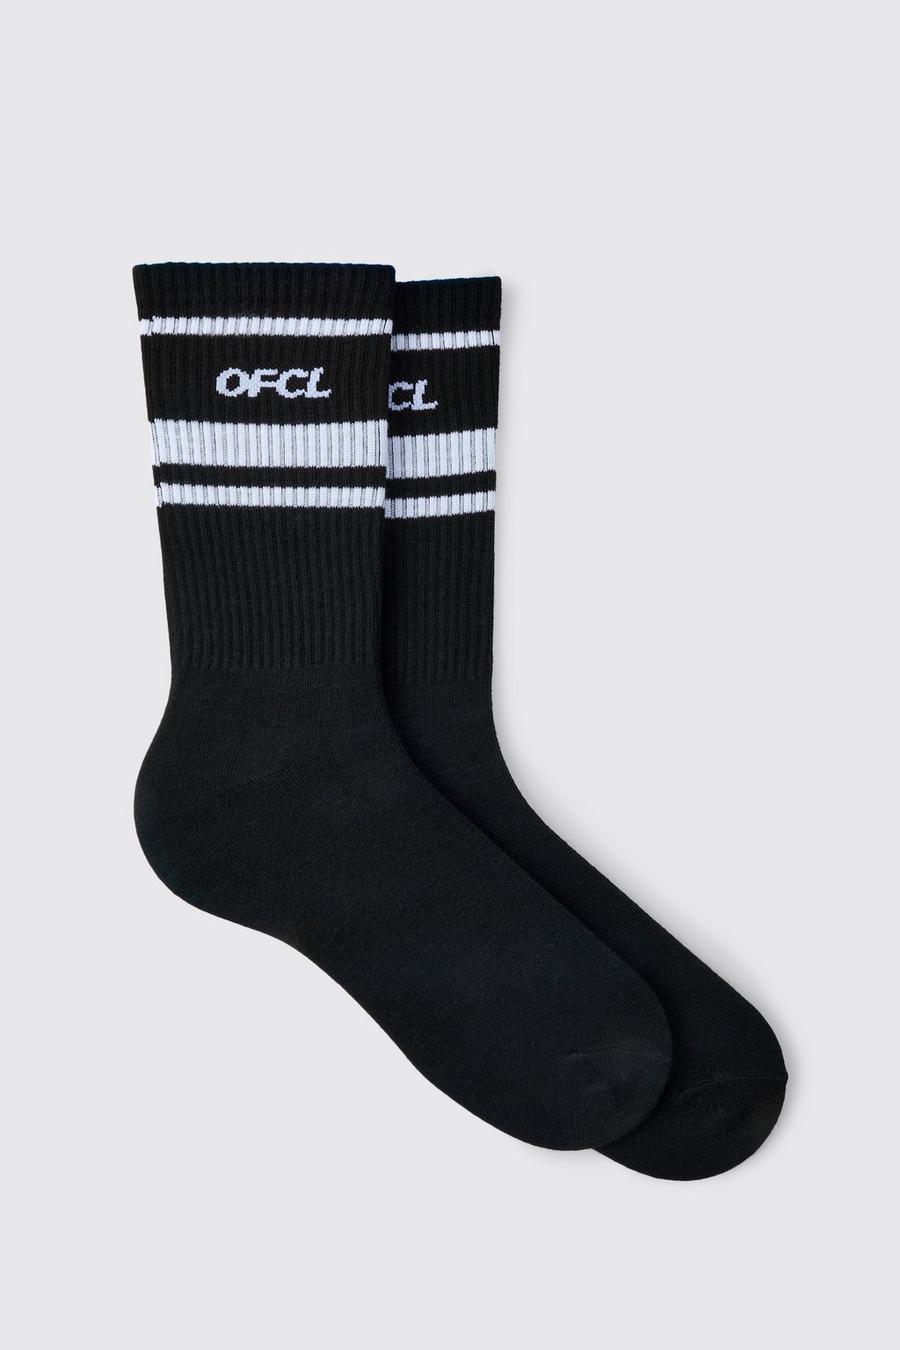 Chaussettes à rayures - Ofcl, Black